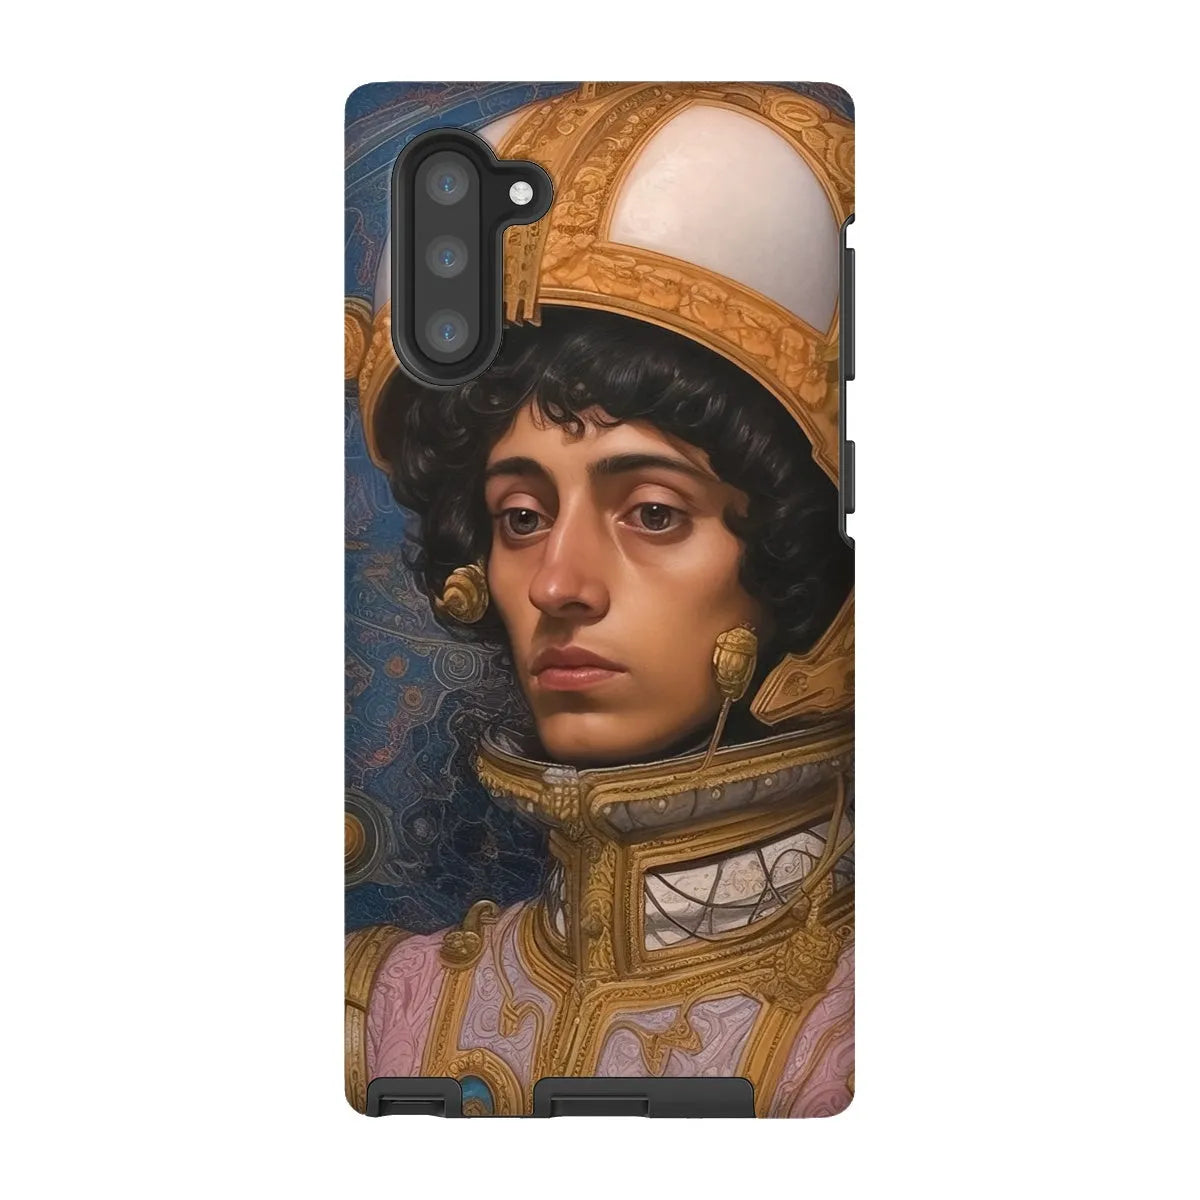 Samir The Gay Astronaut - Lgbtq Art Phone Case - Samsung Galaxy Note 10 / Matte - Mobile Phone Cases - Aesthetic Art